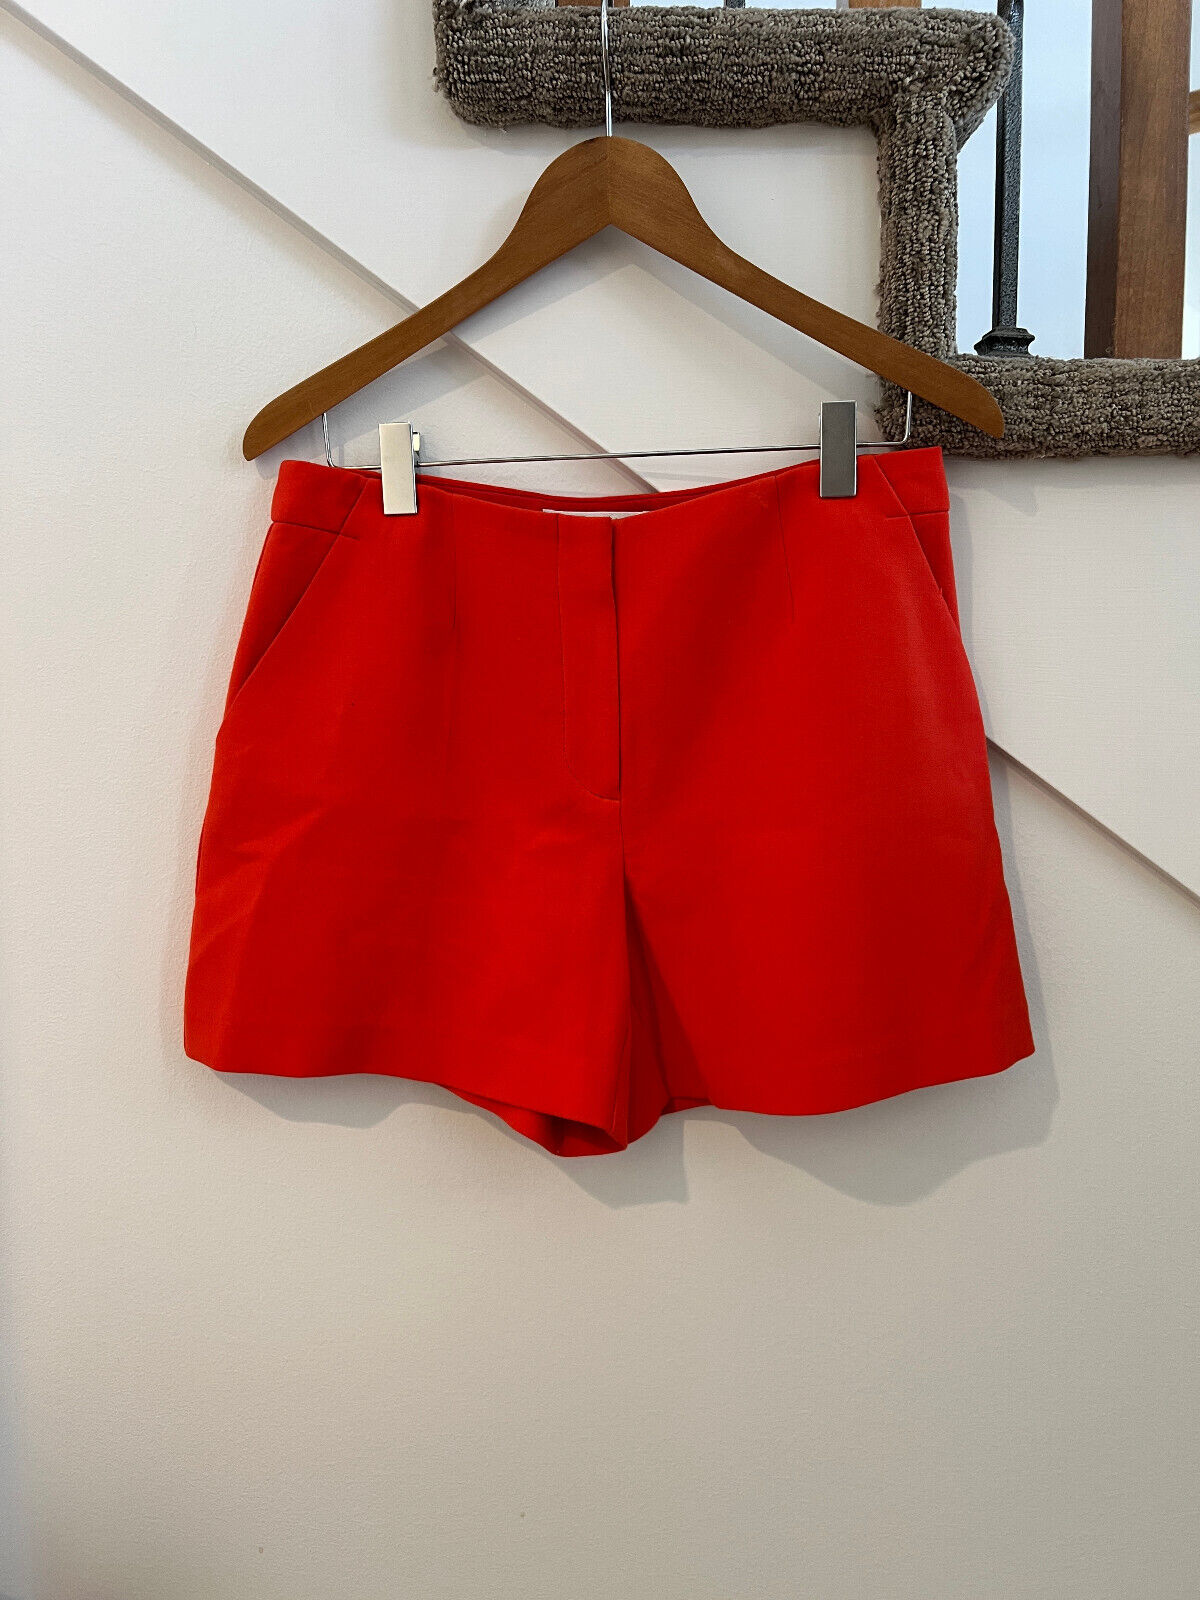 Trina Turk Red Dress Shorts Flat Front ~~Women's Size 6